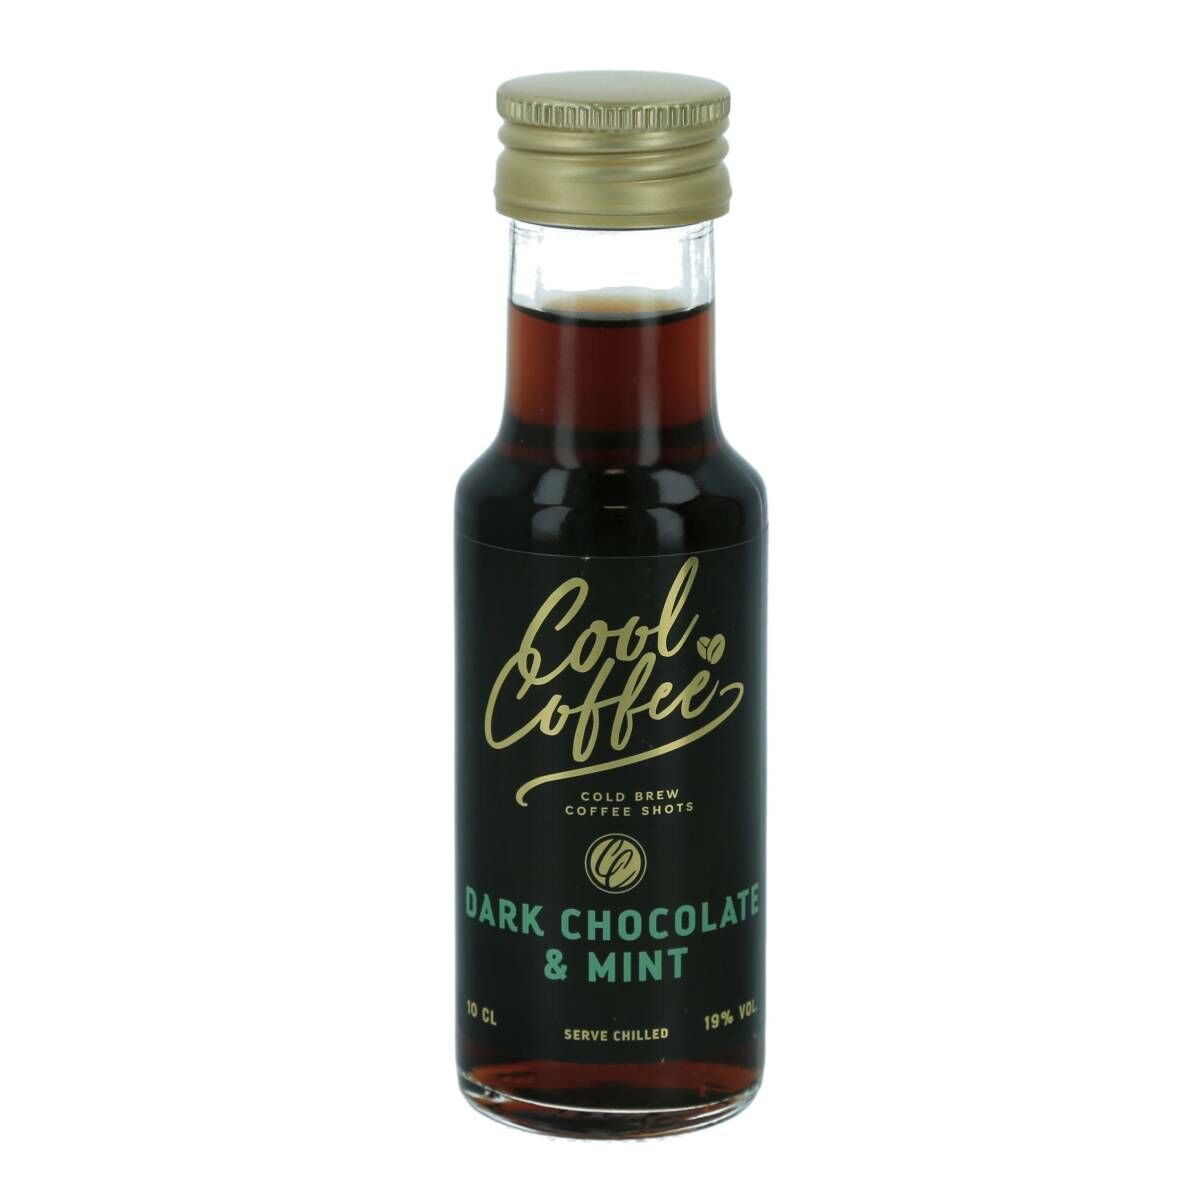 Cool-Coffee Dark Chocolate & Mint 10CL